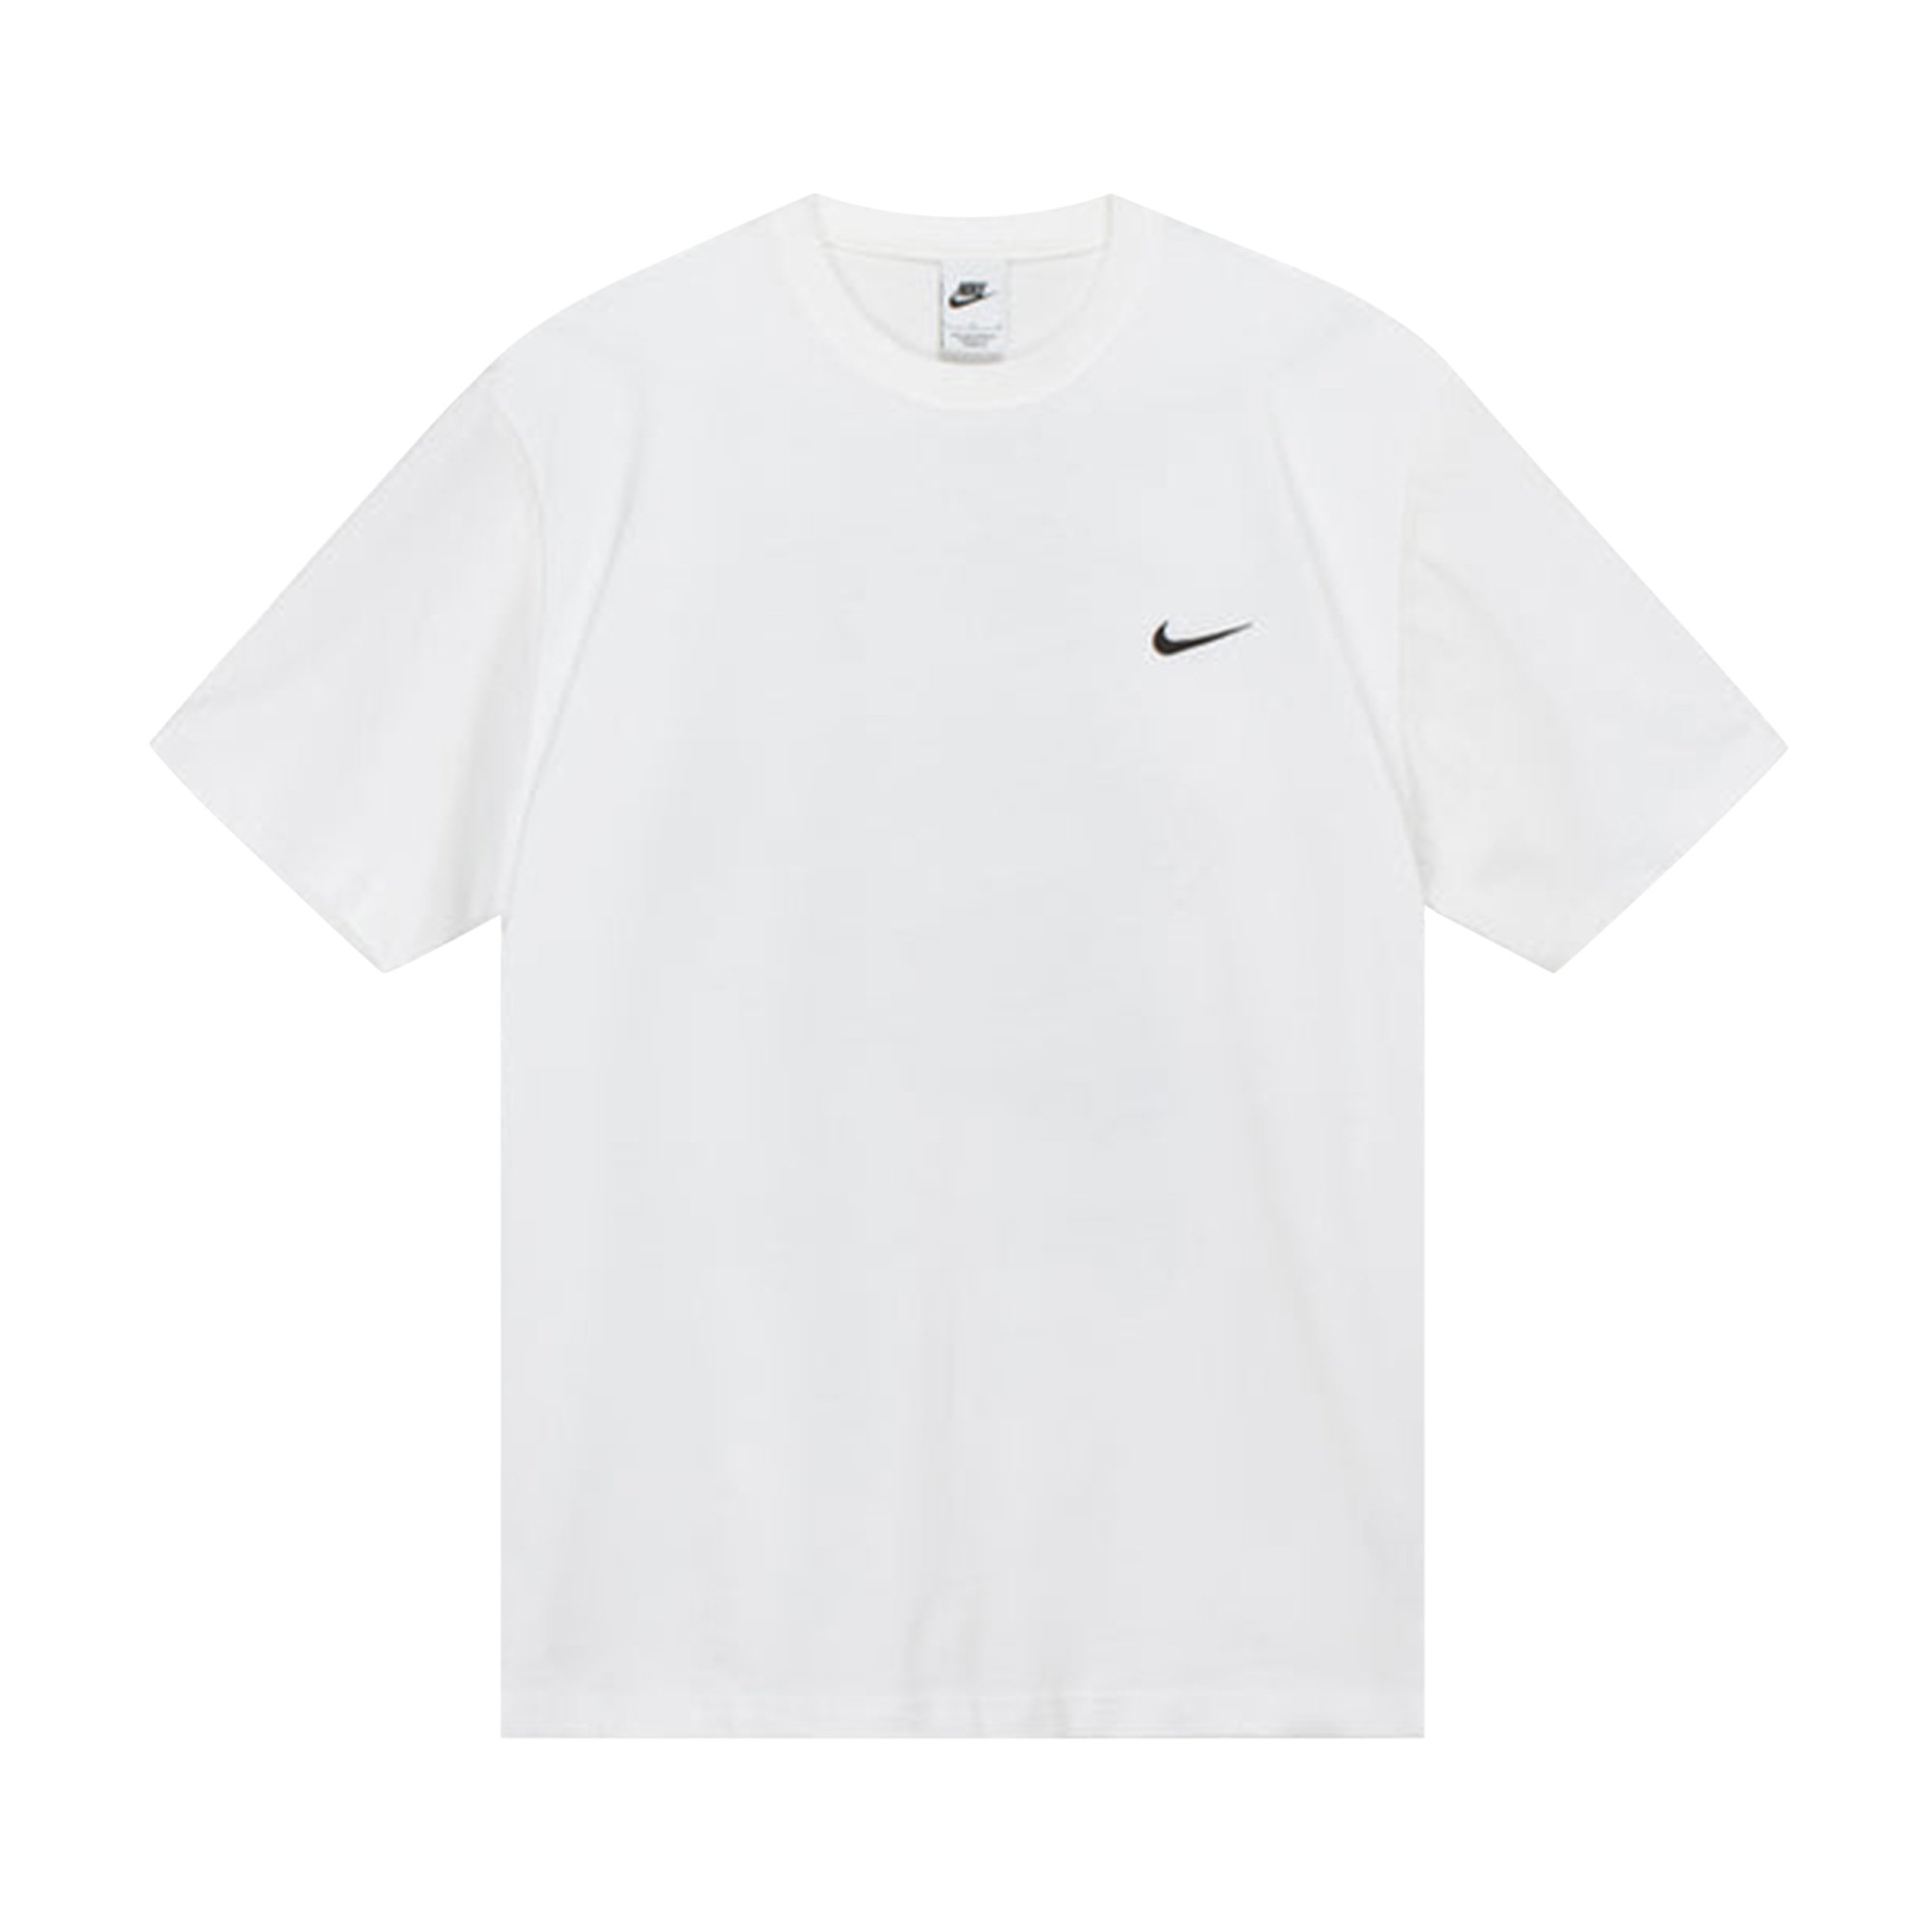 Nike x Stussy T-Shirt White